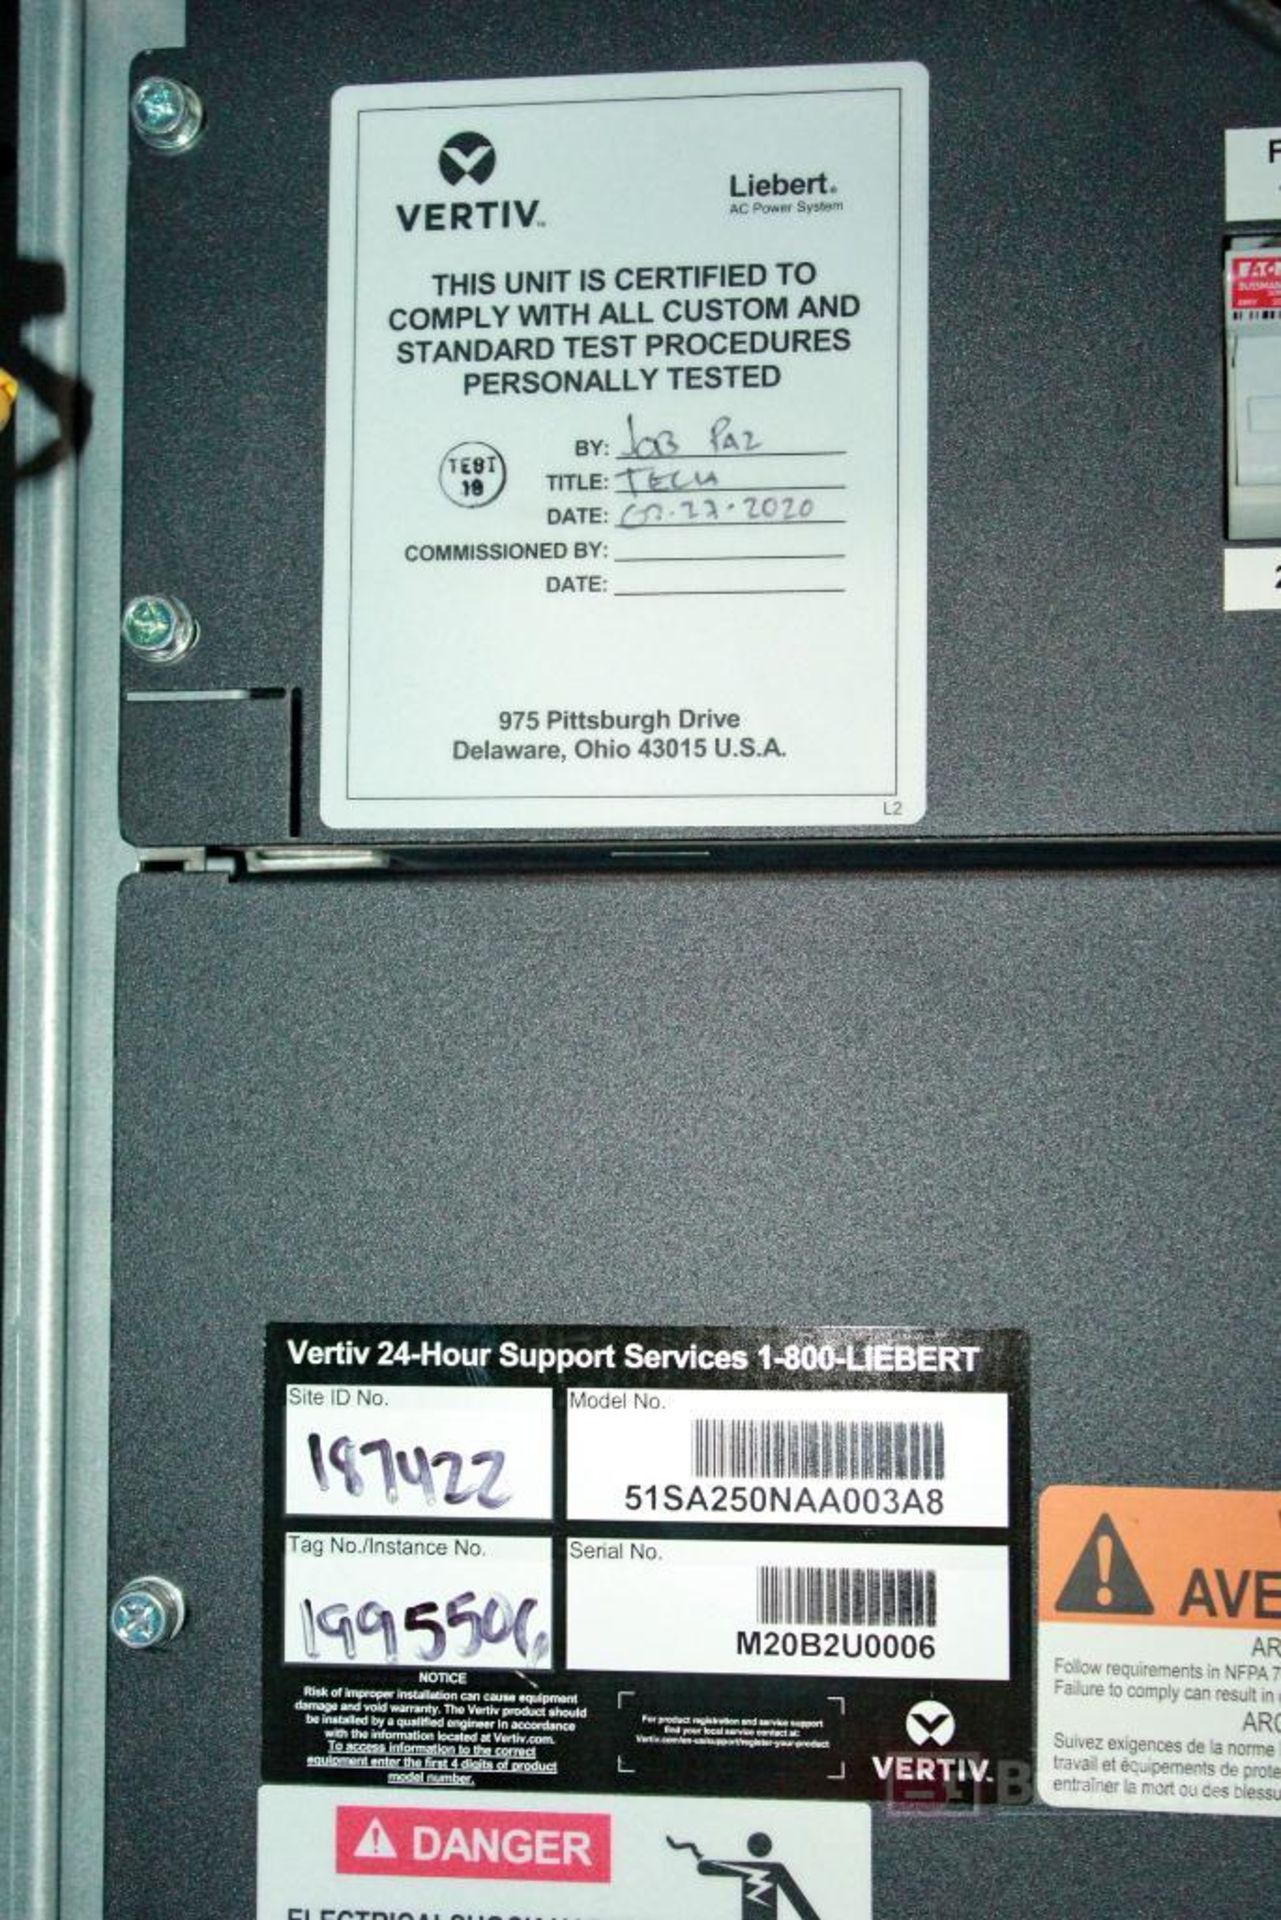 Vertiv Liebert EXM 51SA250NAA003A8 250-kVA AC Power UPS System, (2020) - Image 14 of 19